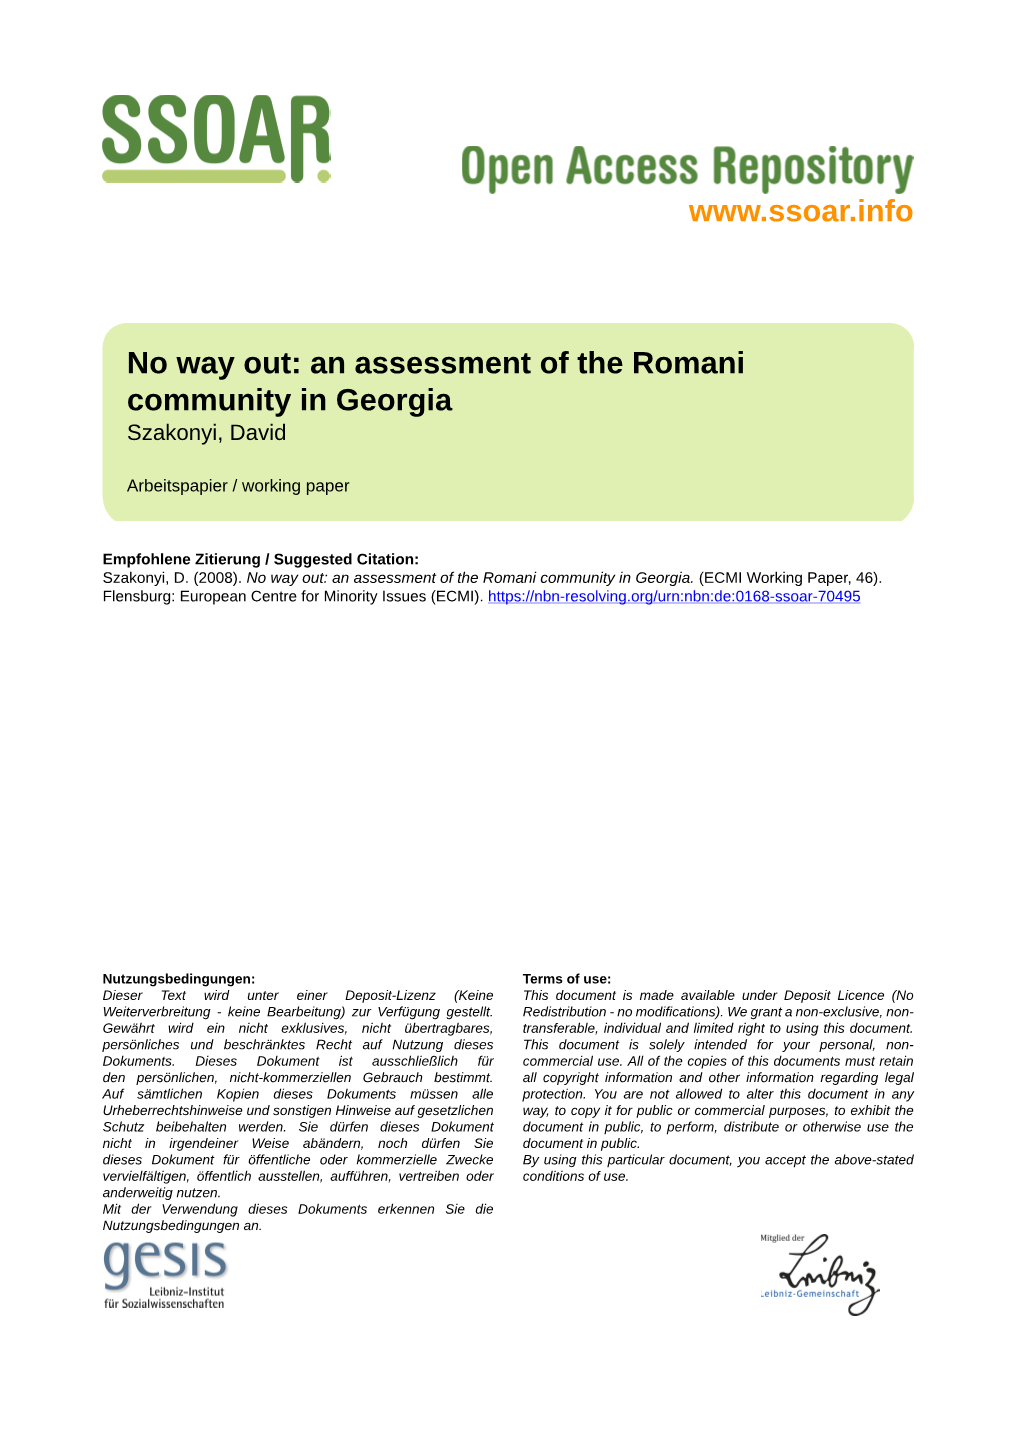 No Way Out: an Assessment of the Romani Community in Georgia Szakonyi, David